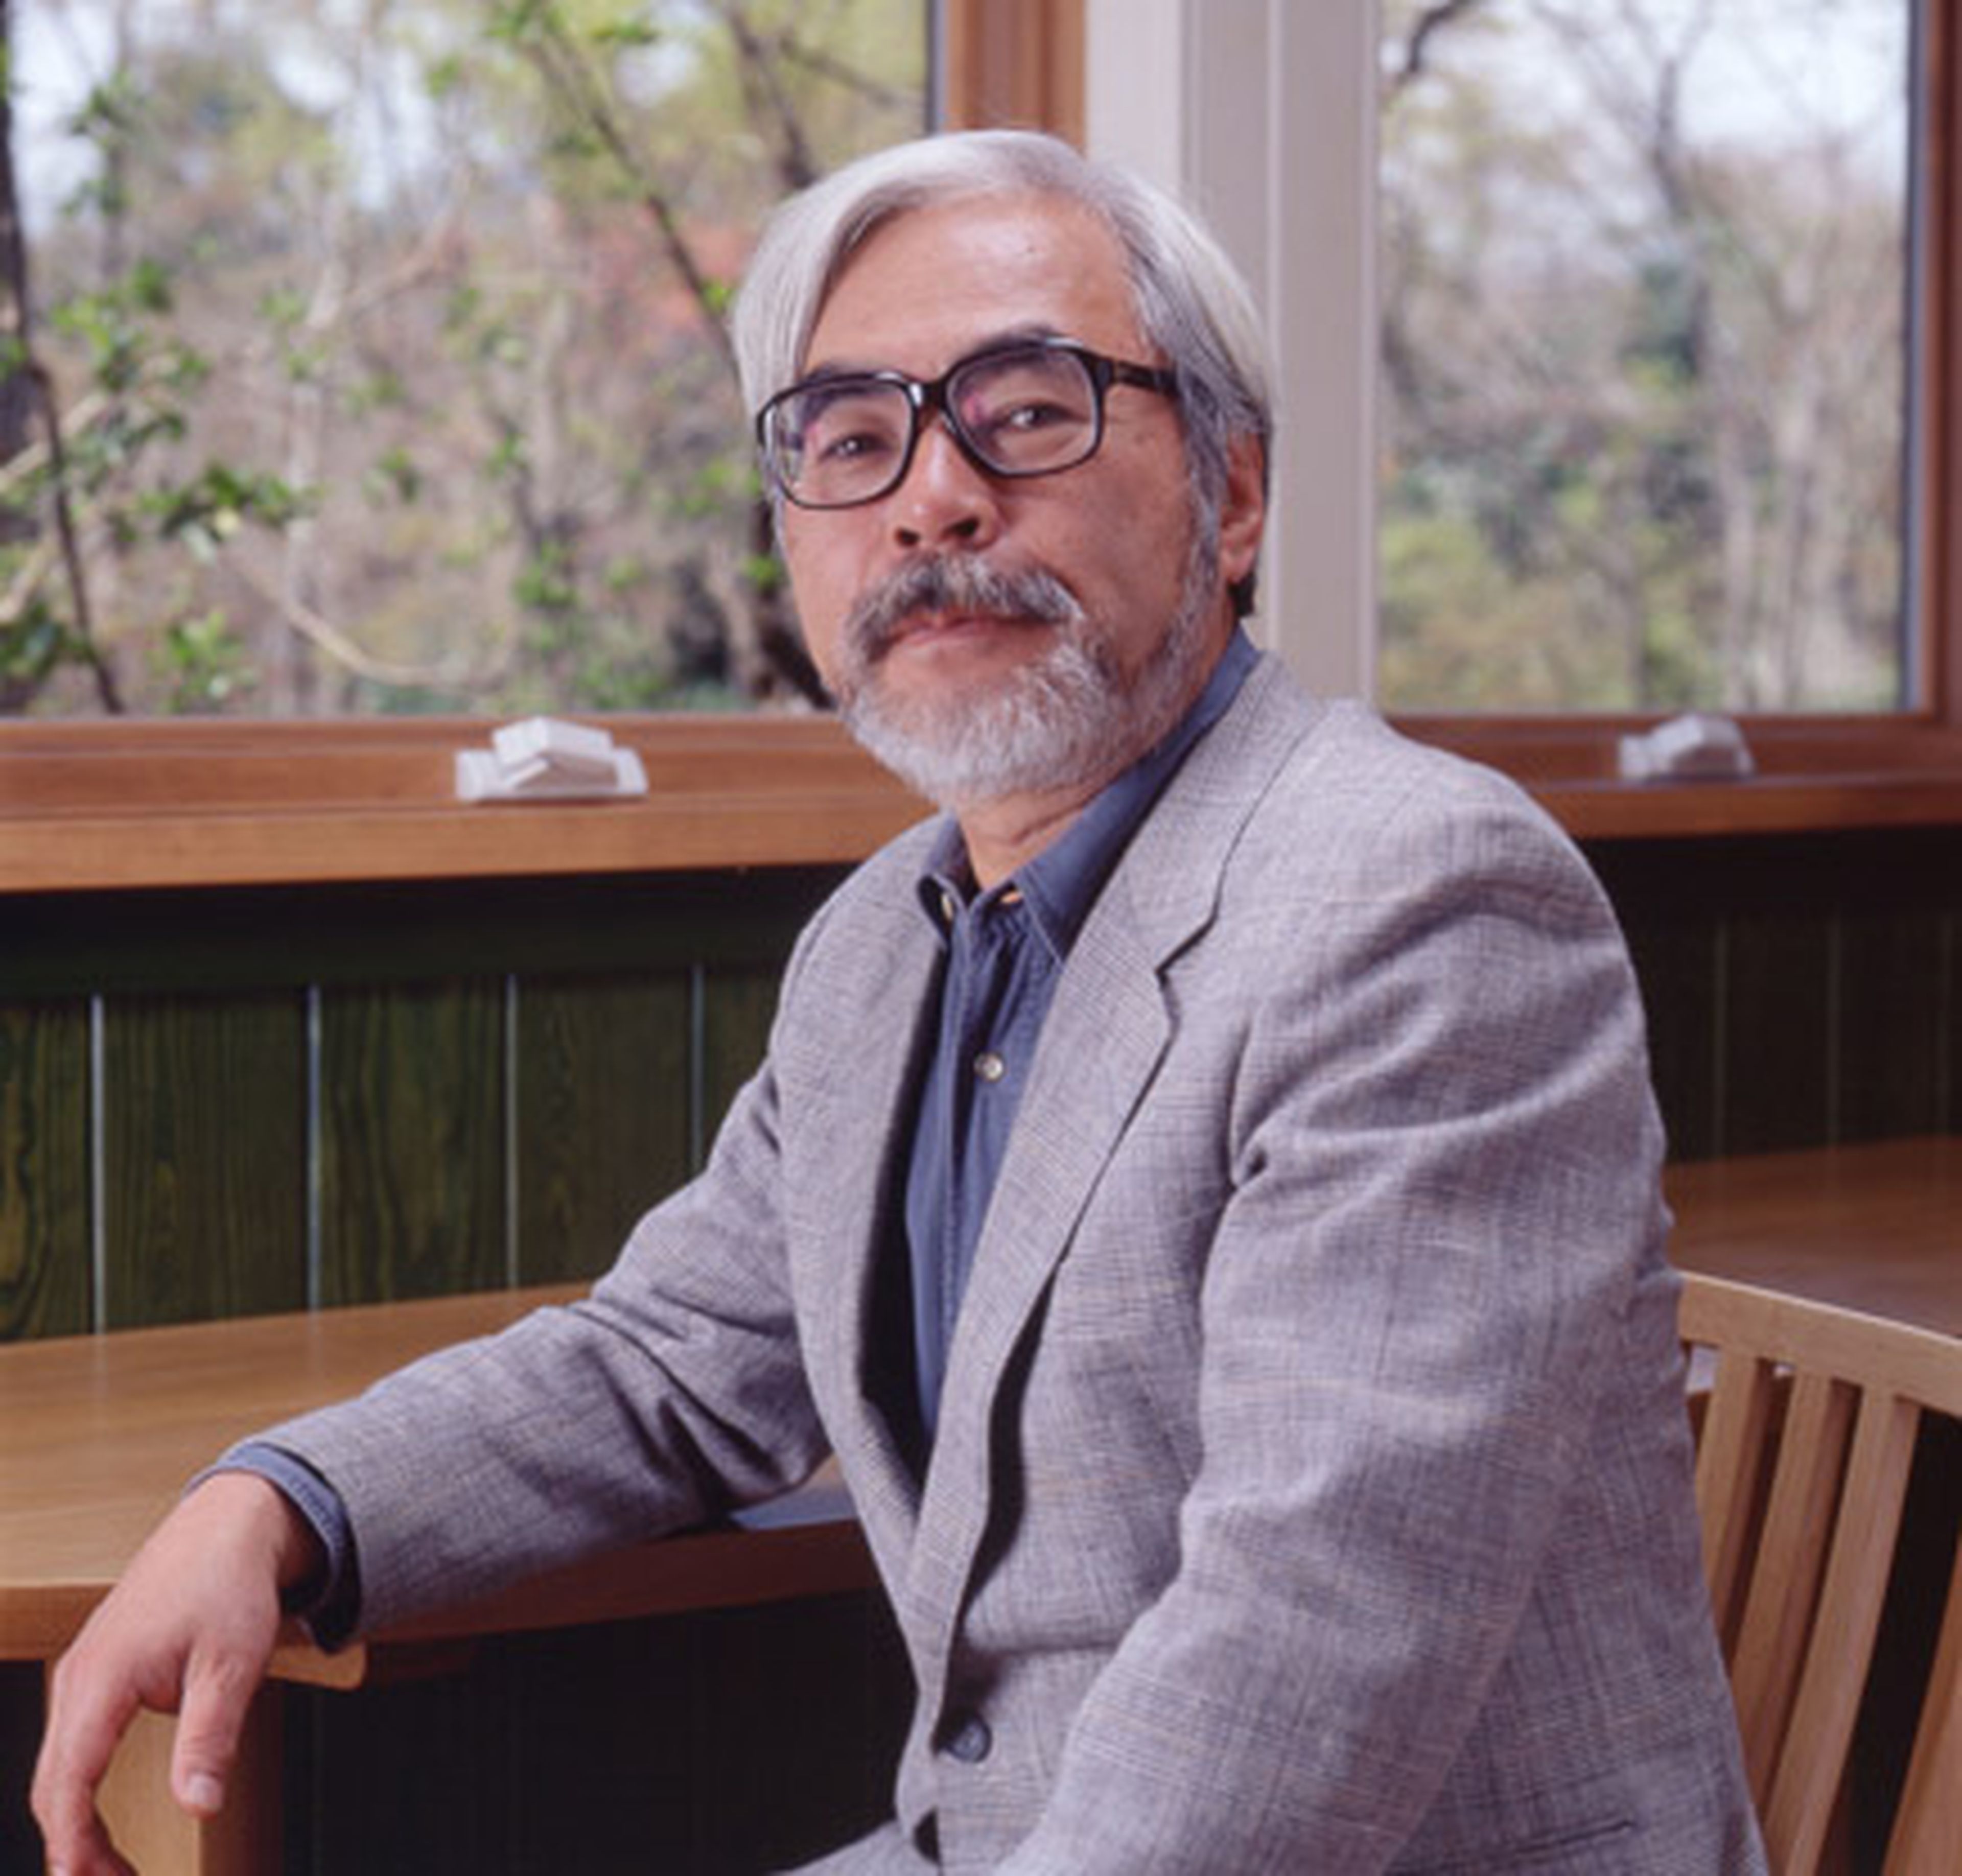 El director Hayao Miyazaki se retira